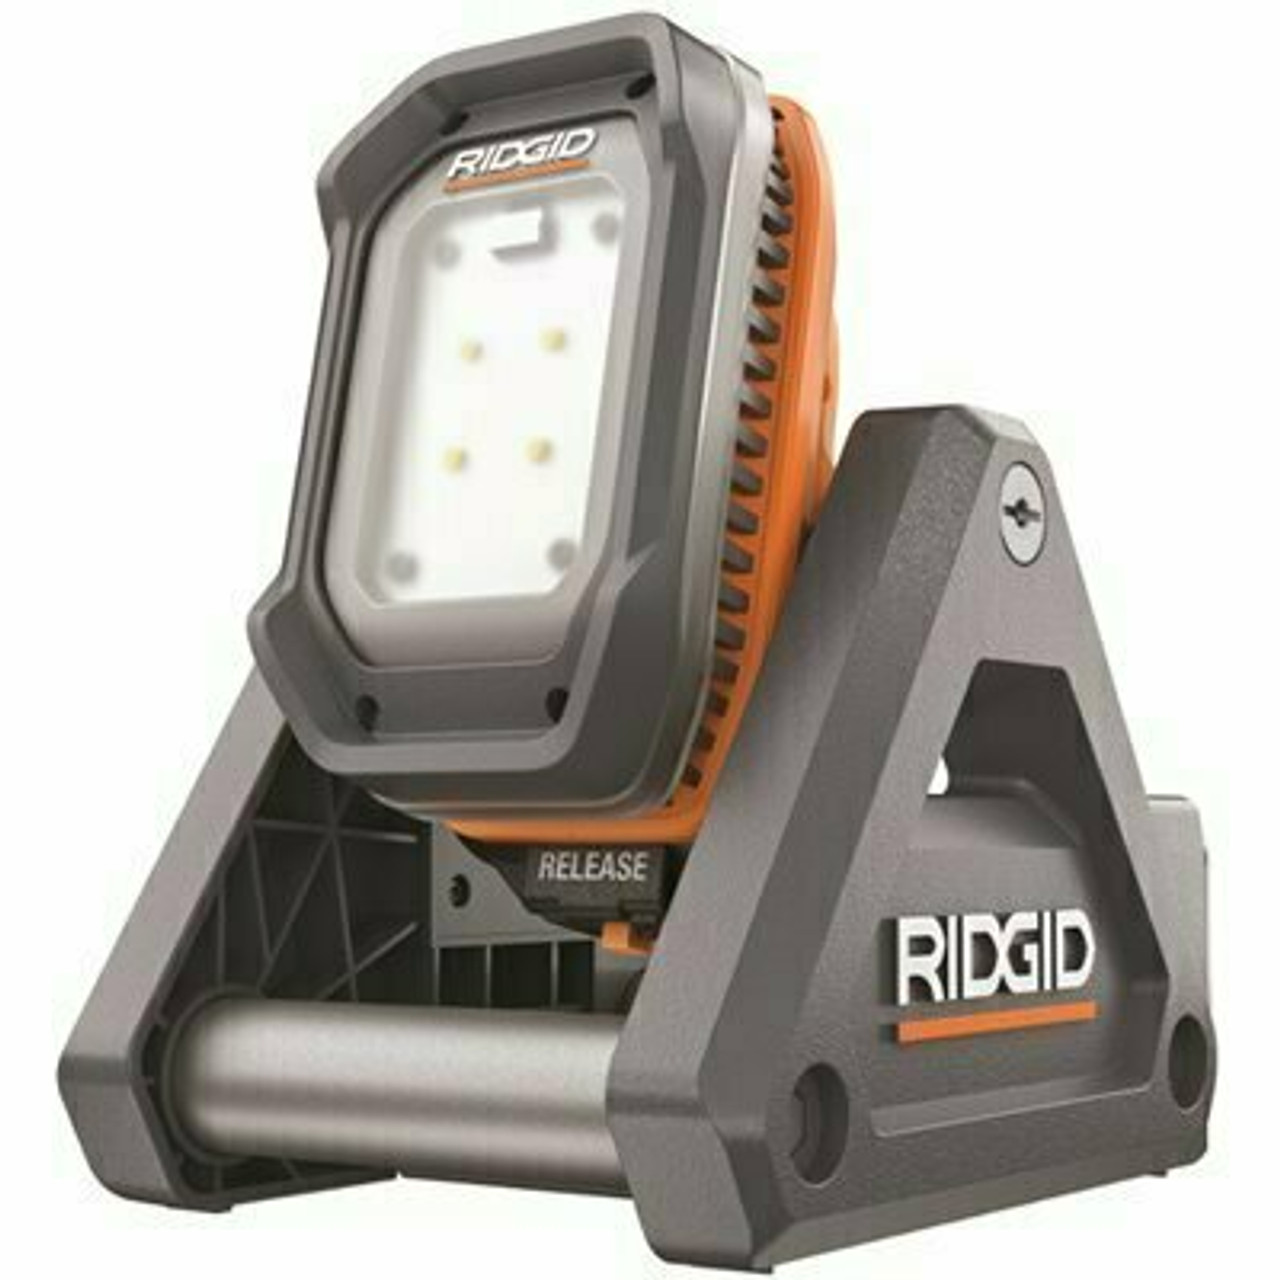 Ridgid 18V Cordless Flood Light With Detachable Light (Tool Only)